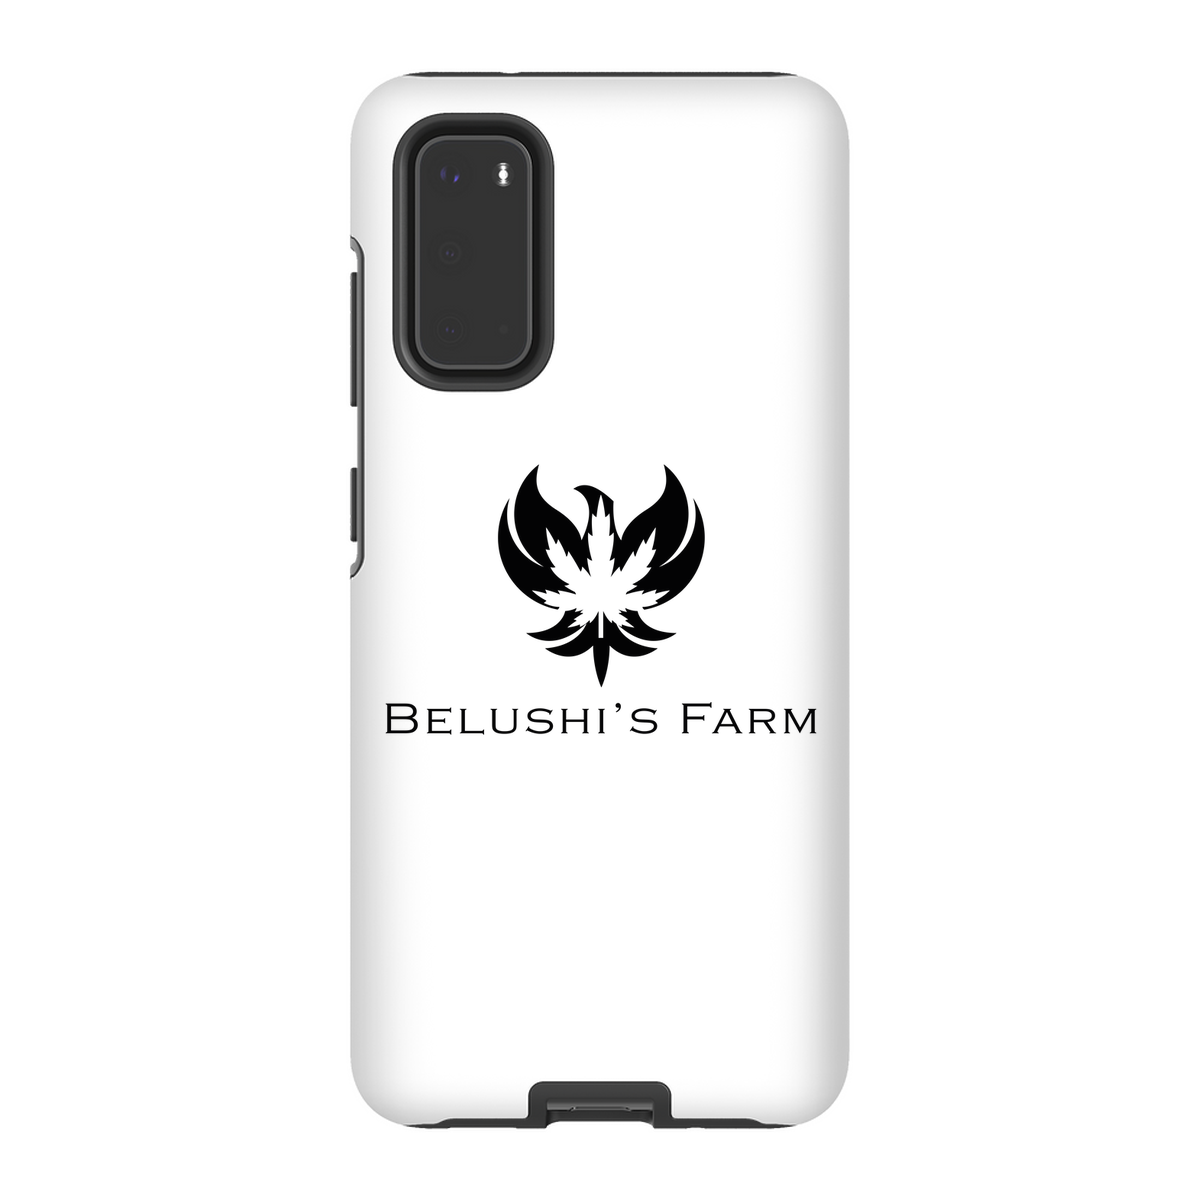 Belushi's Farm Phoenix Phone Cases